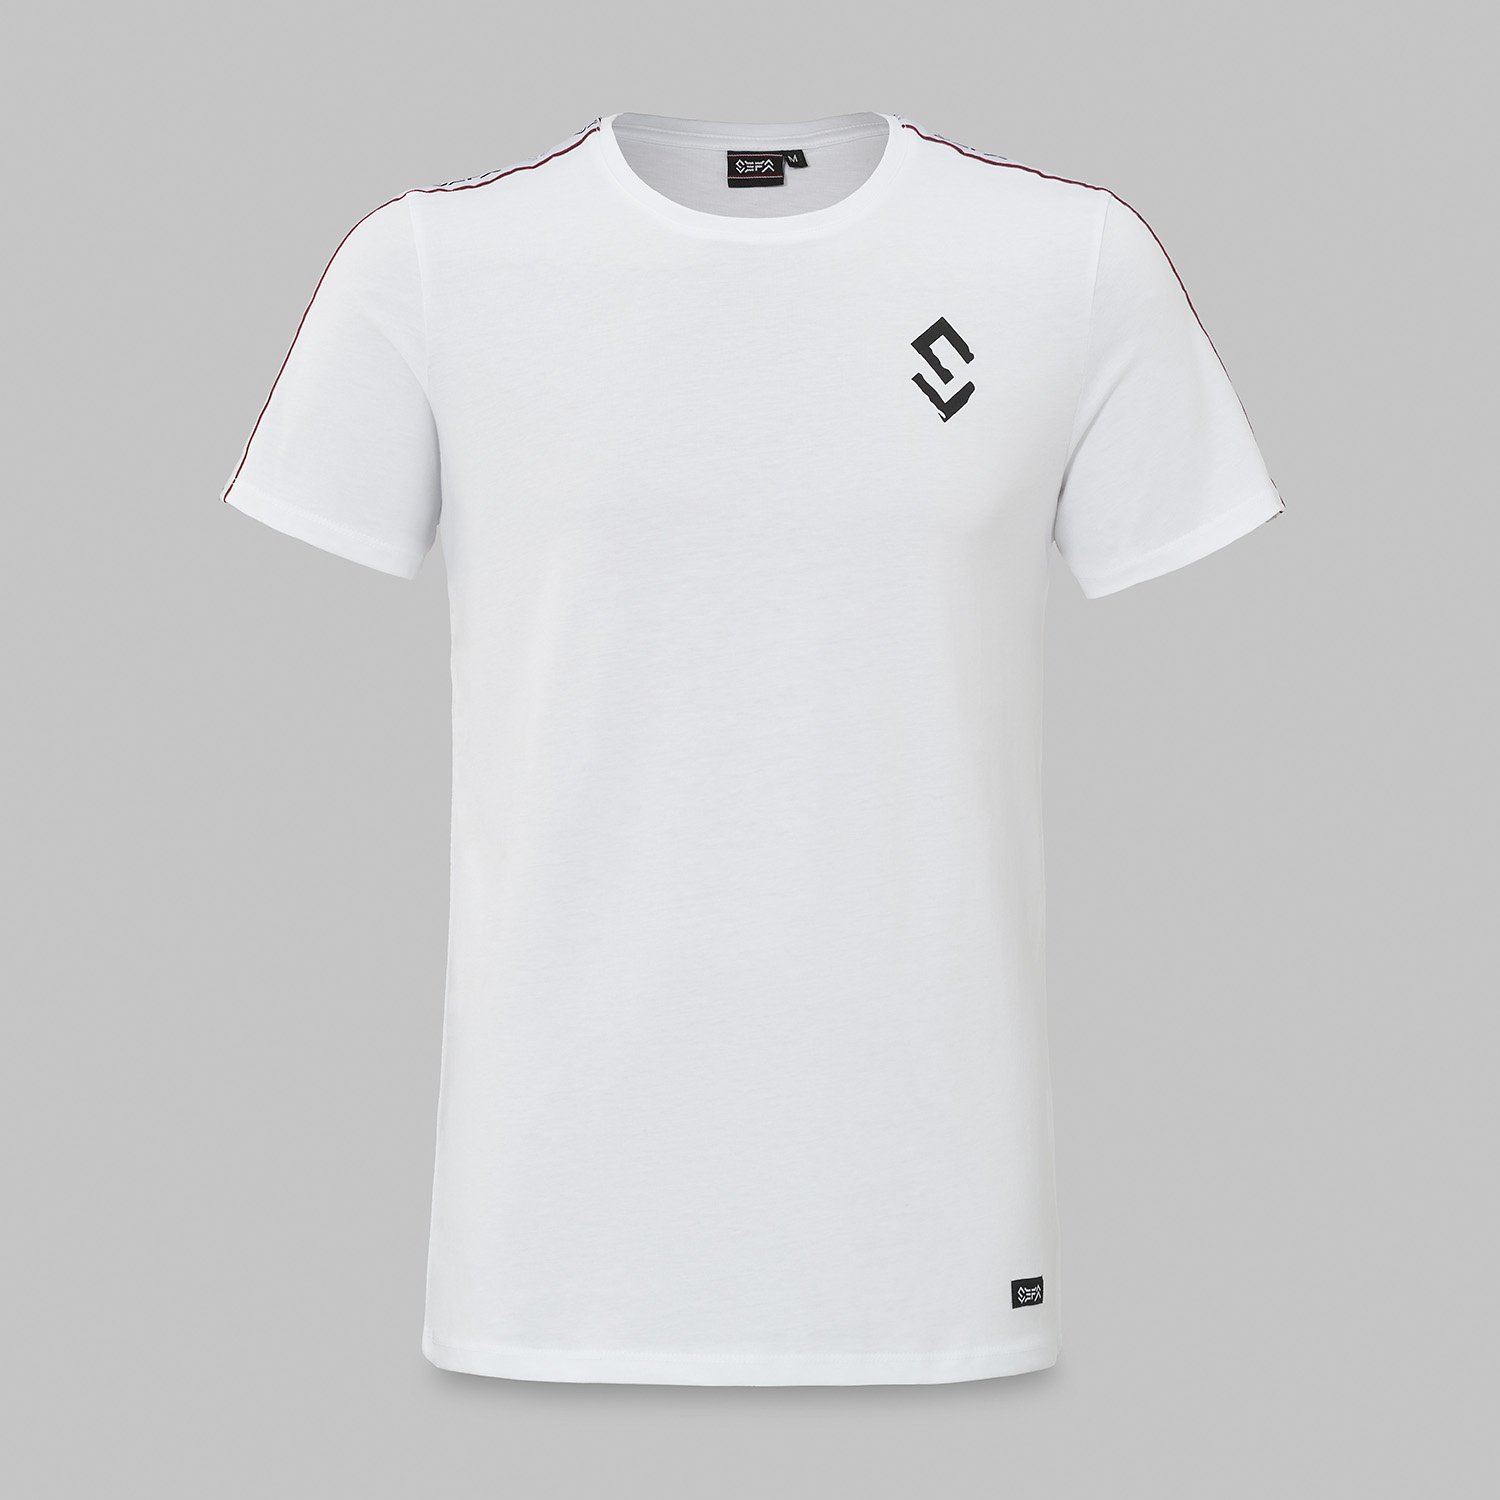 Sefa t-shirt white/tape-2